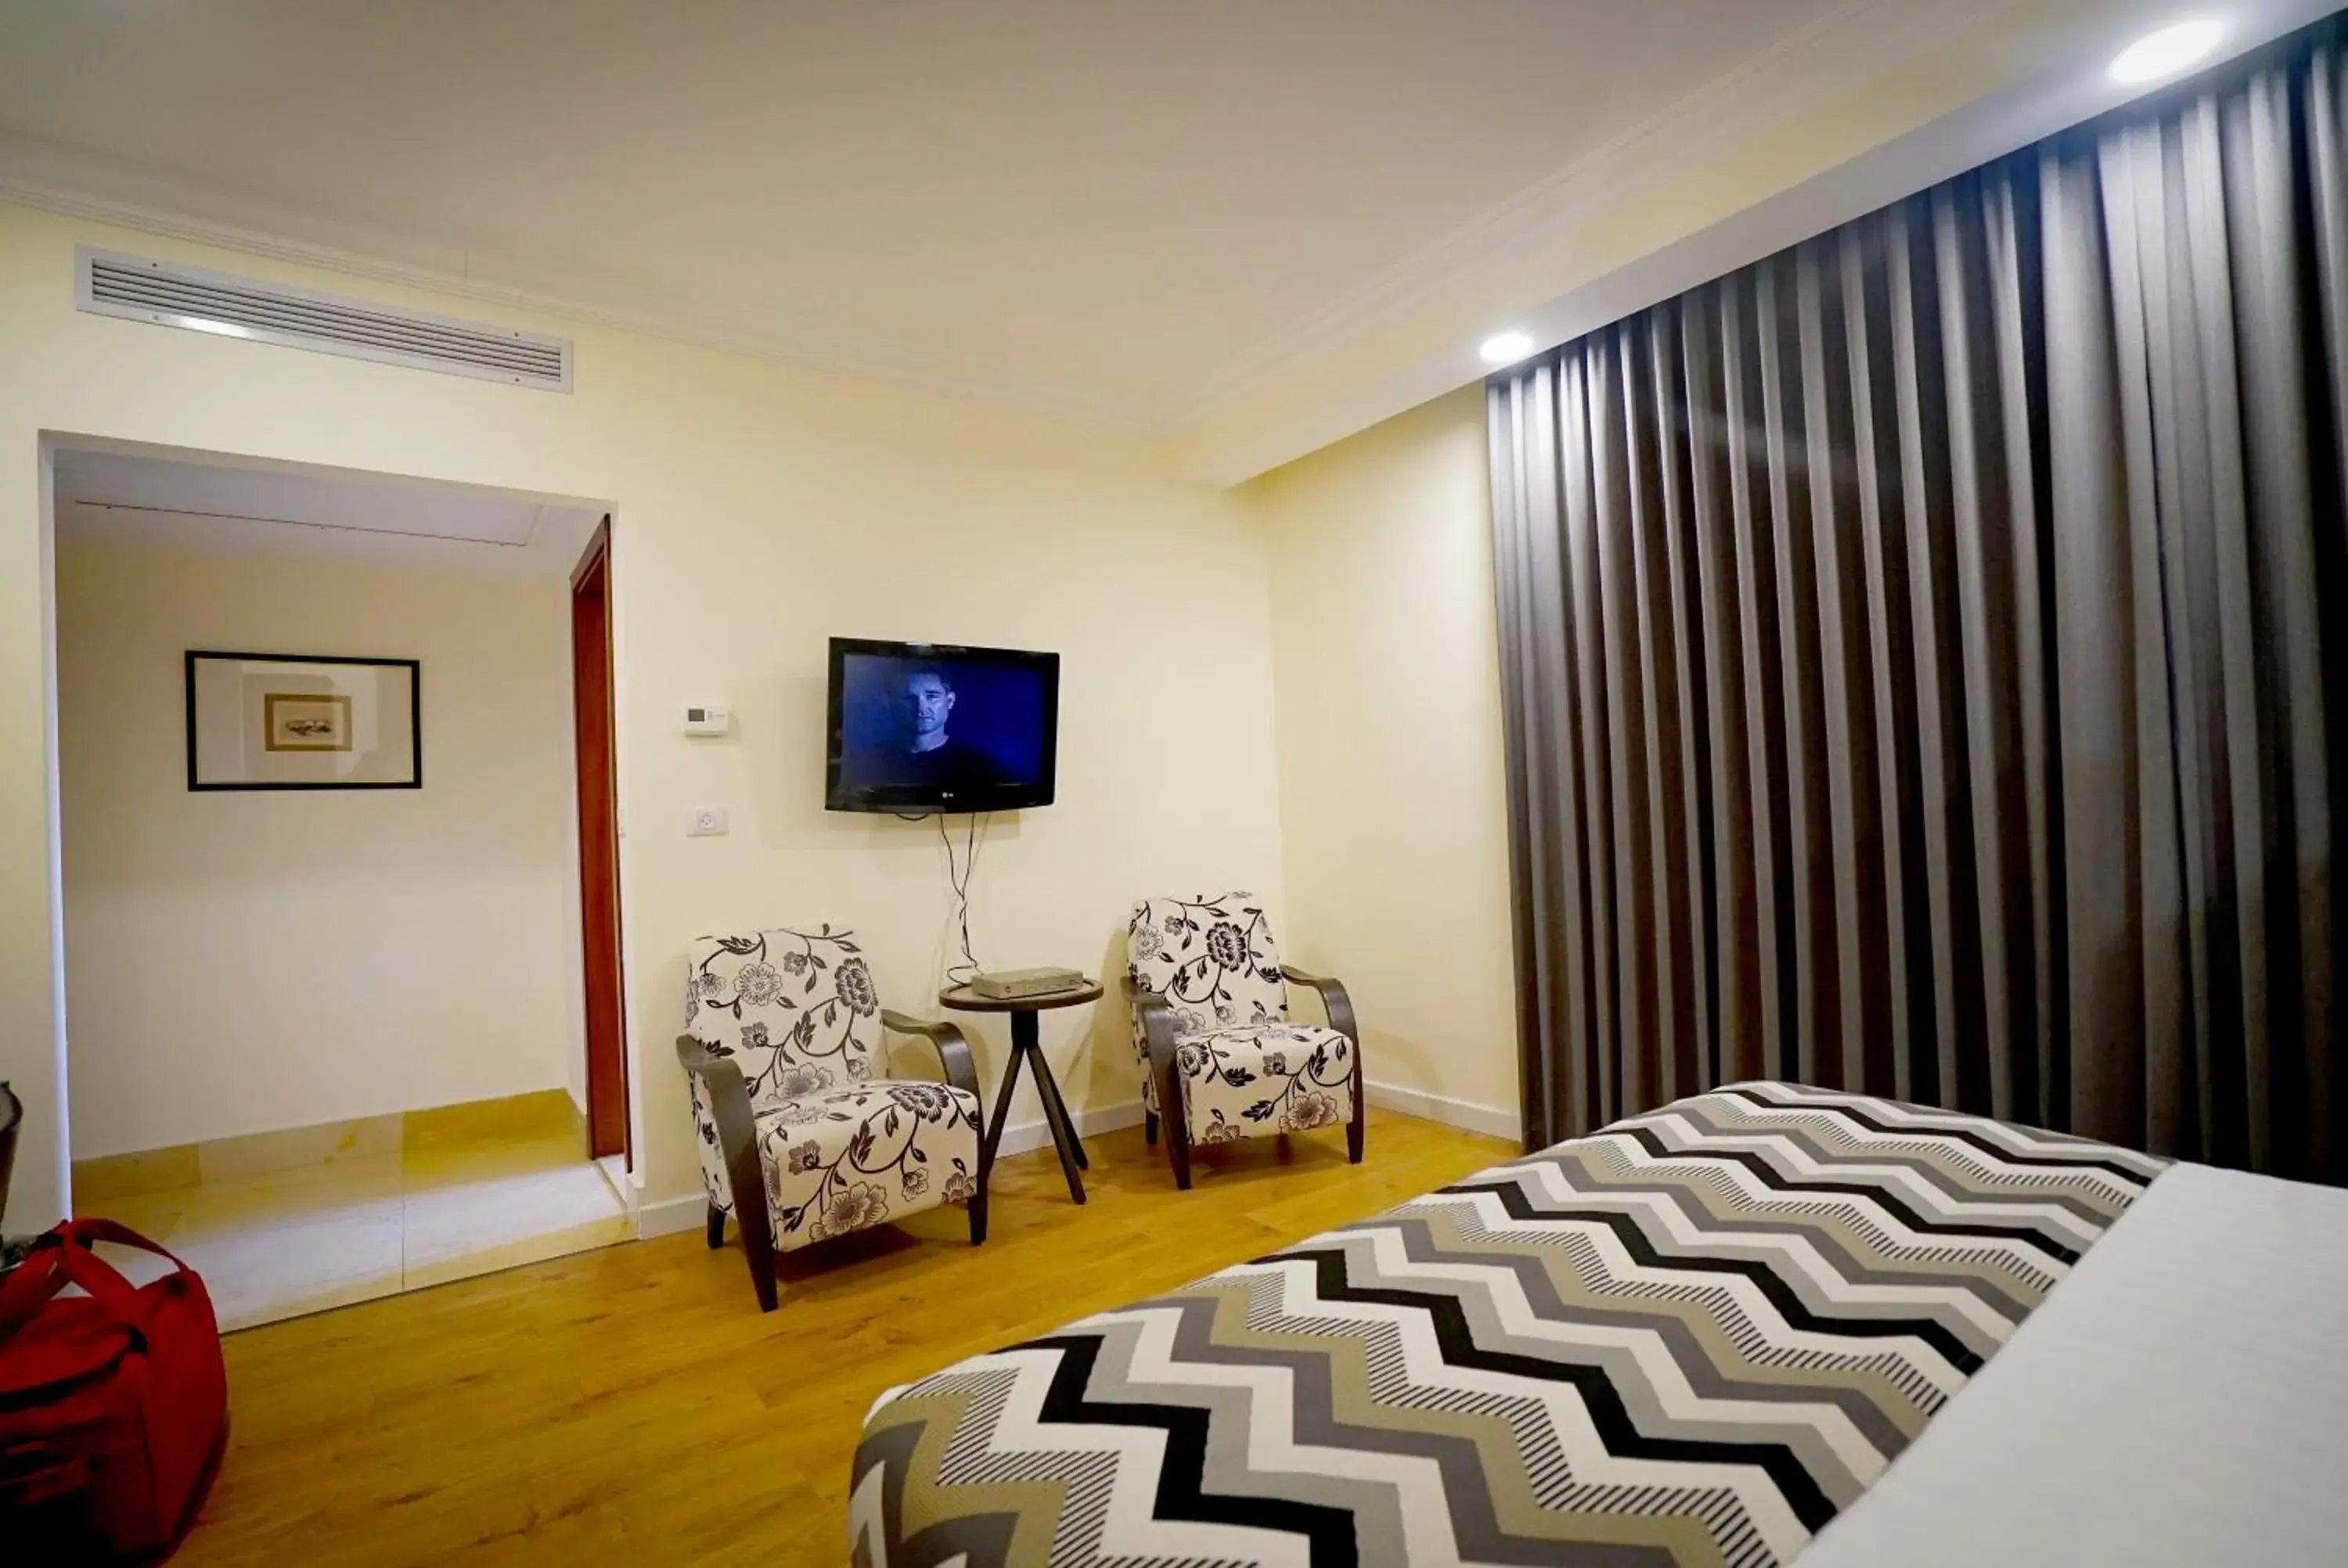 Superior Room with Balcony in Ambassador Hotel